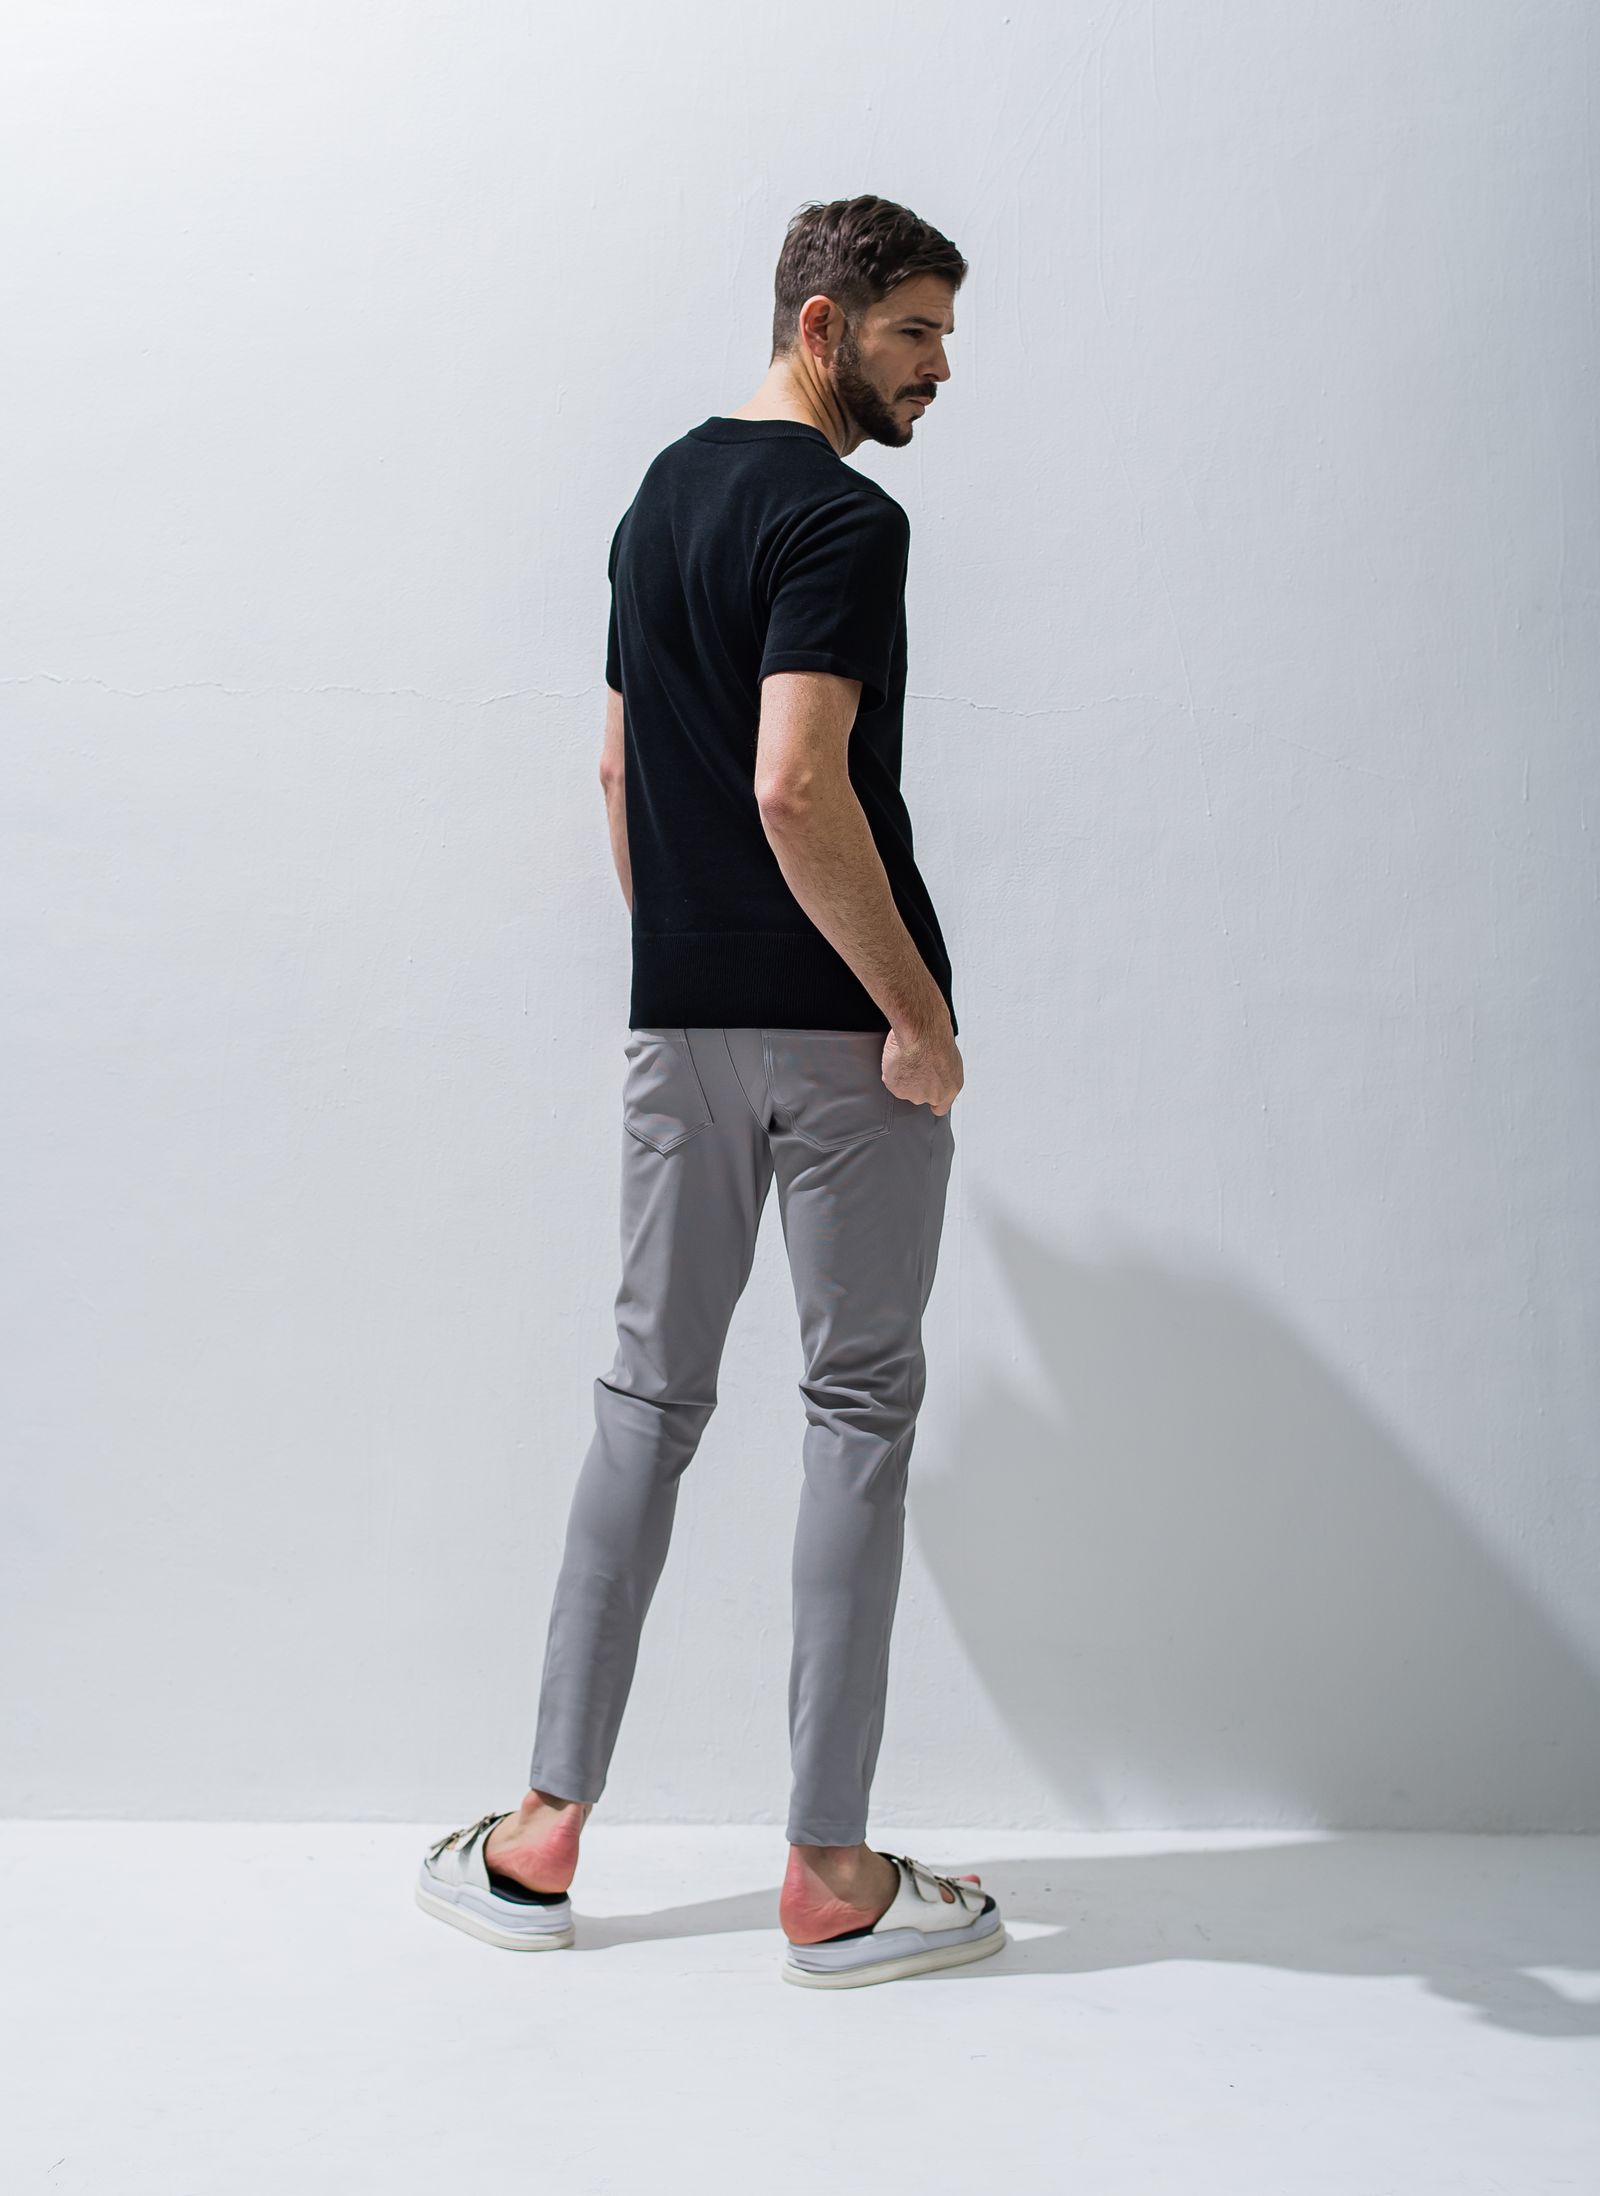 RESOUND CLOTHING - CHRIS EASY TUCK PANTS / イージータックパンツ